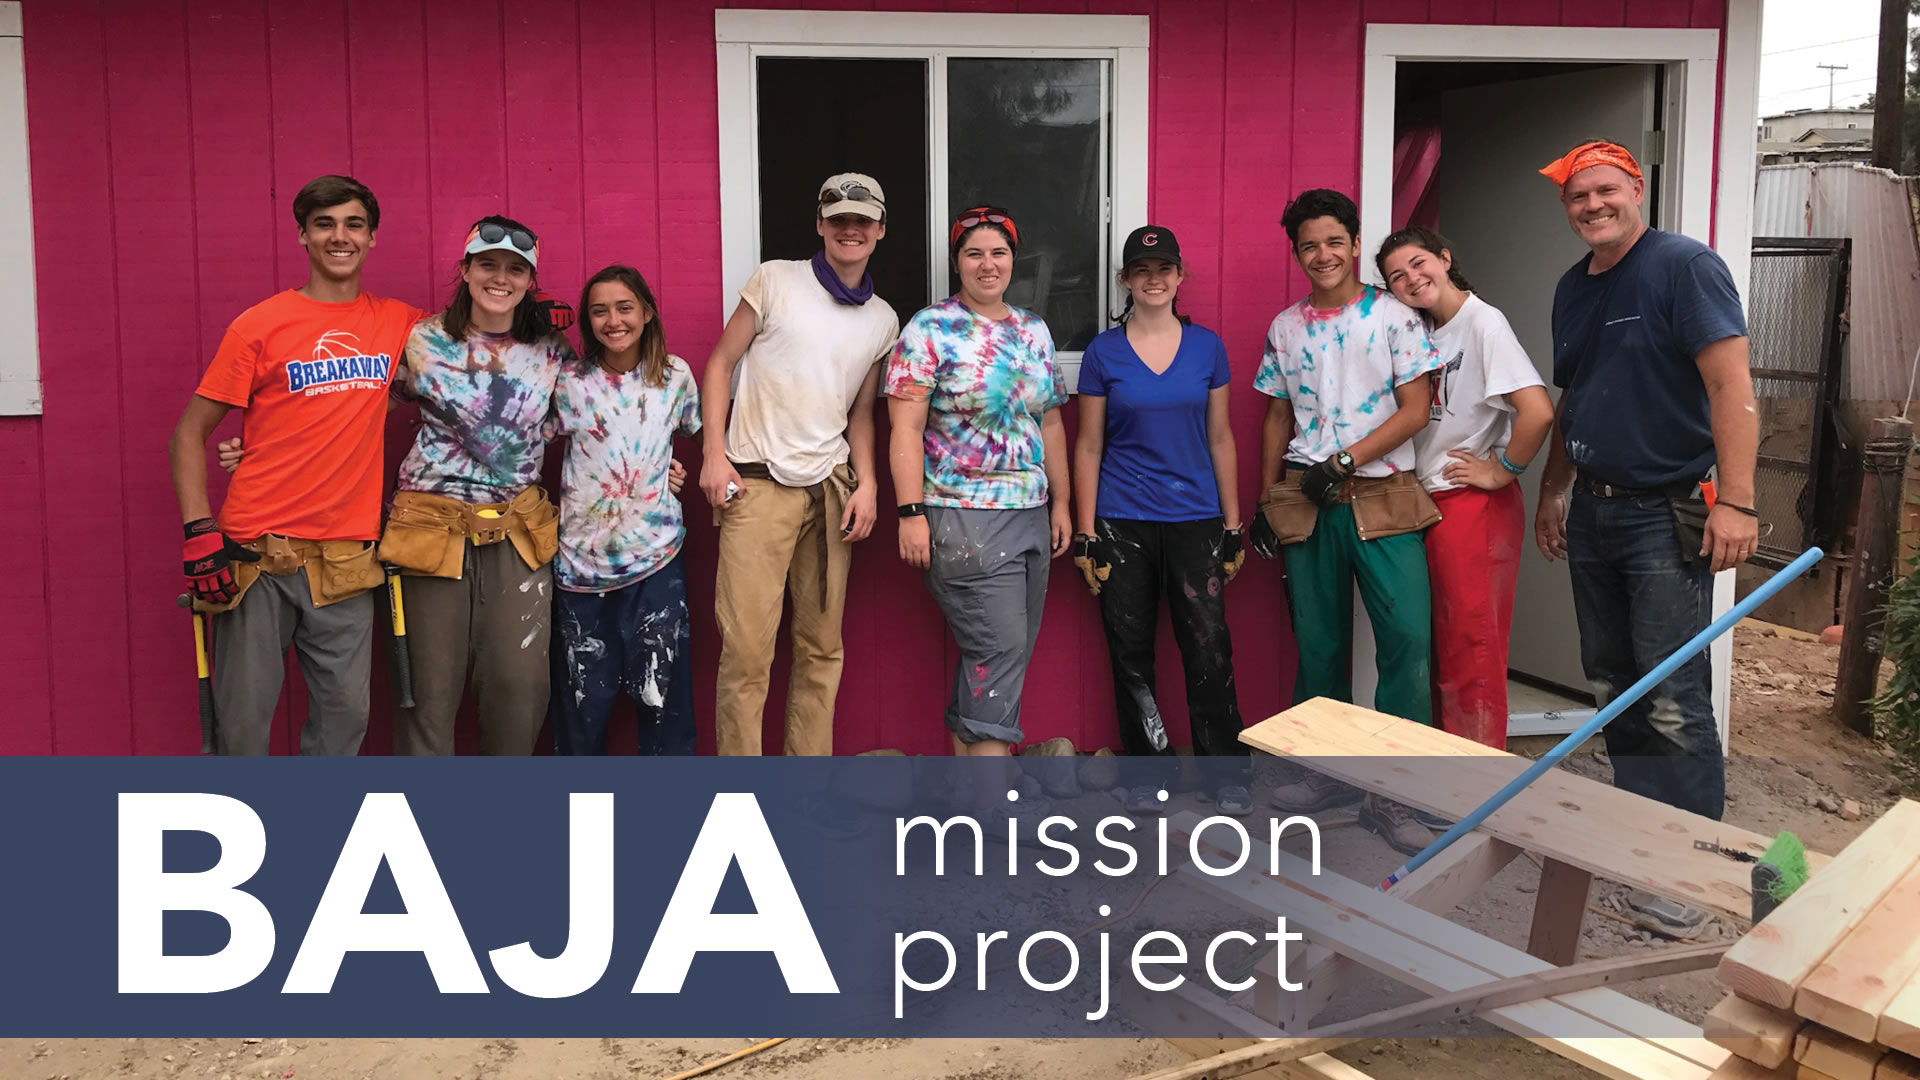 Baja Mission Project | July 23–30
High School Mission Project | Grades 11–12
